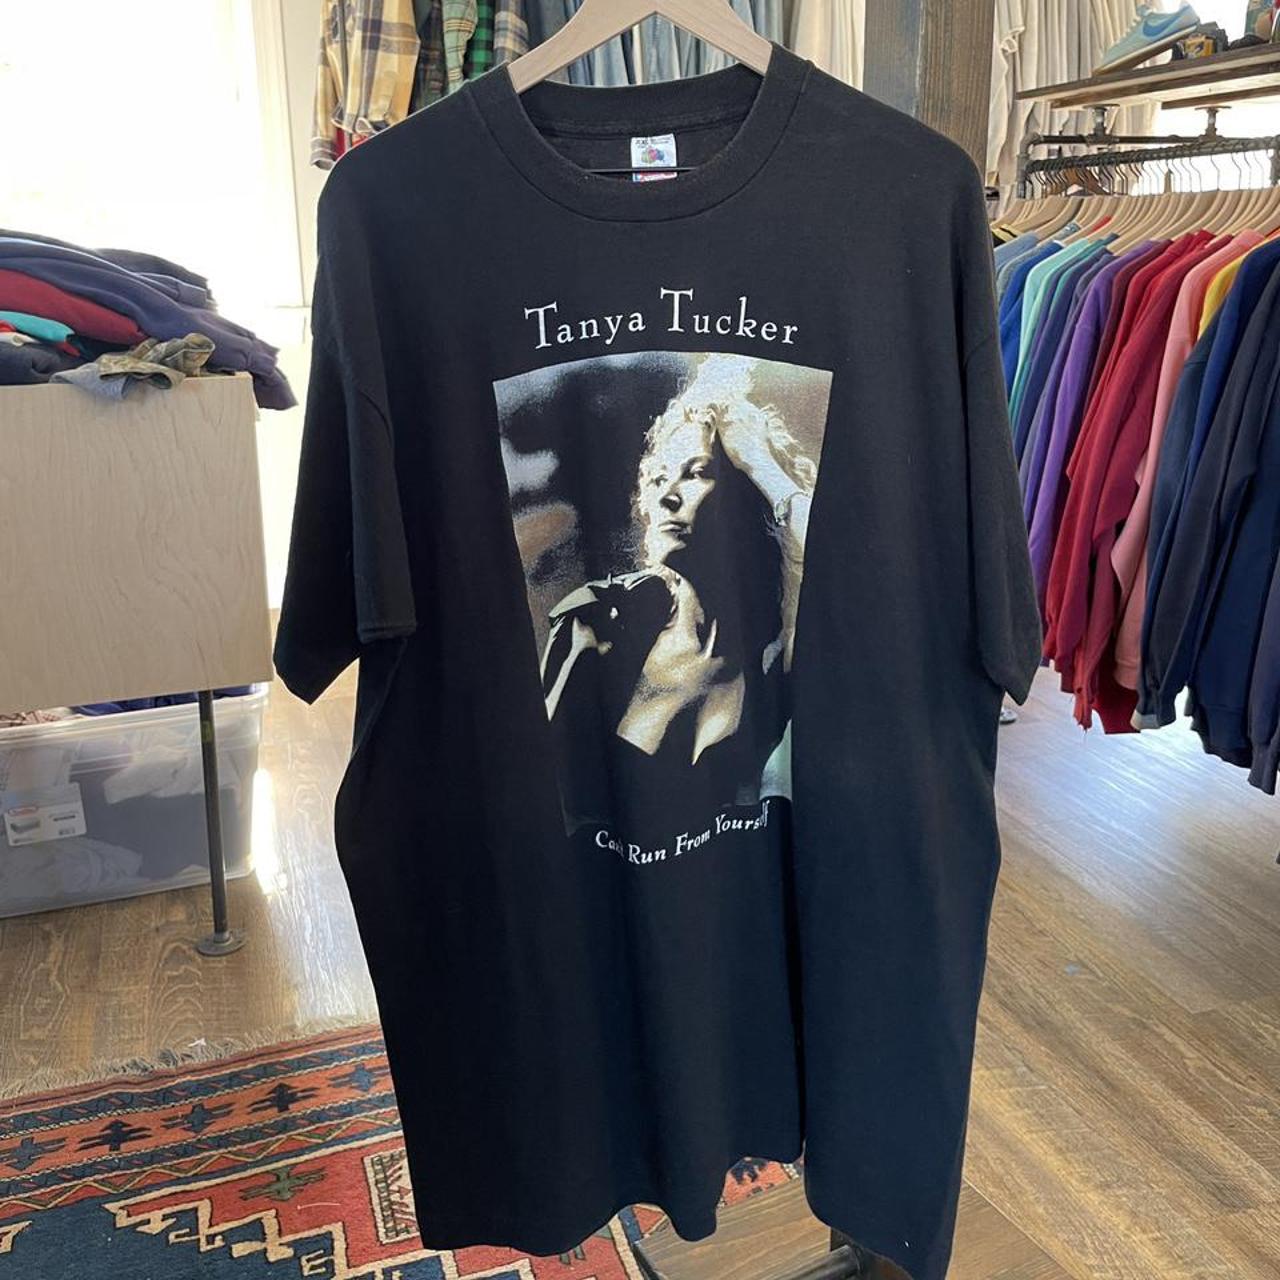 Product Image 1 - 1993 Tanya Tucker Tour Shirt

Size